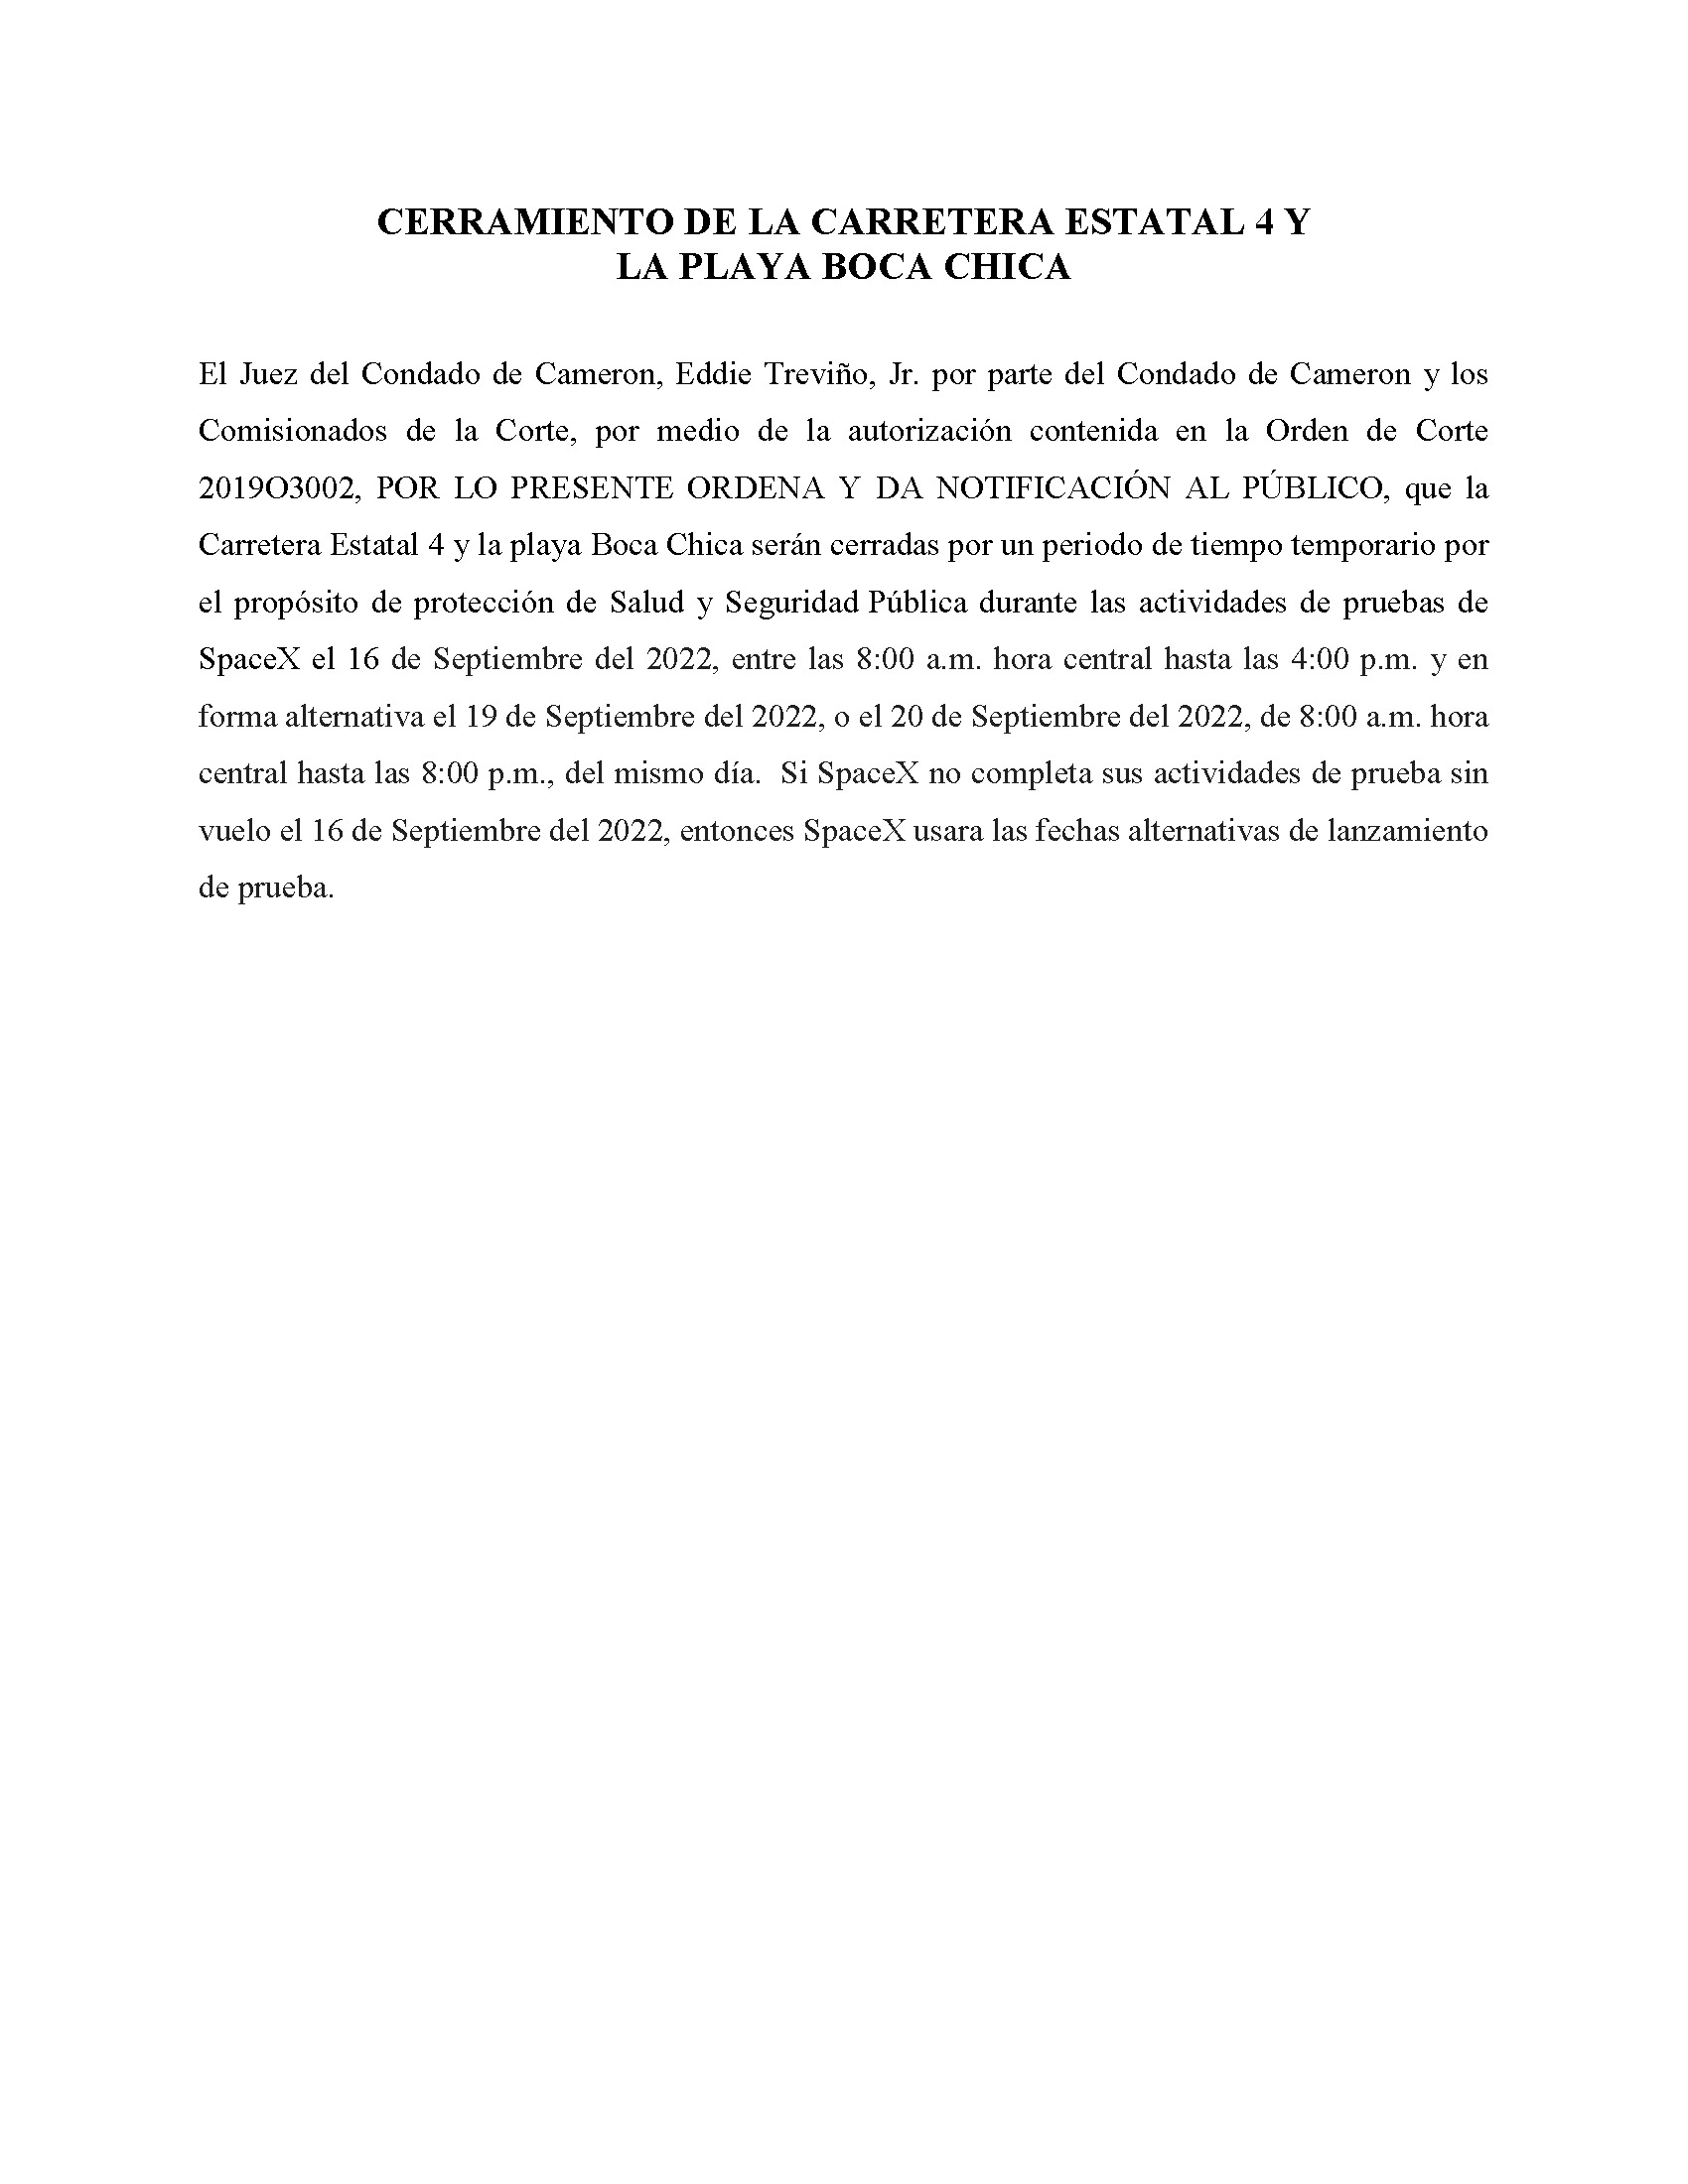 ORDER.CLOSURE OF HIGHWAY 4 Y LA PLAYA BOCA CHICA.SPANISH.09.16.2022